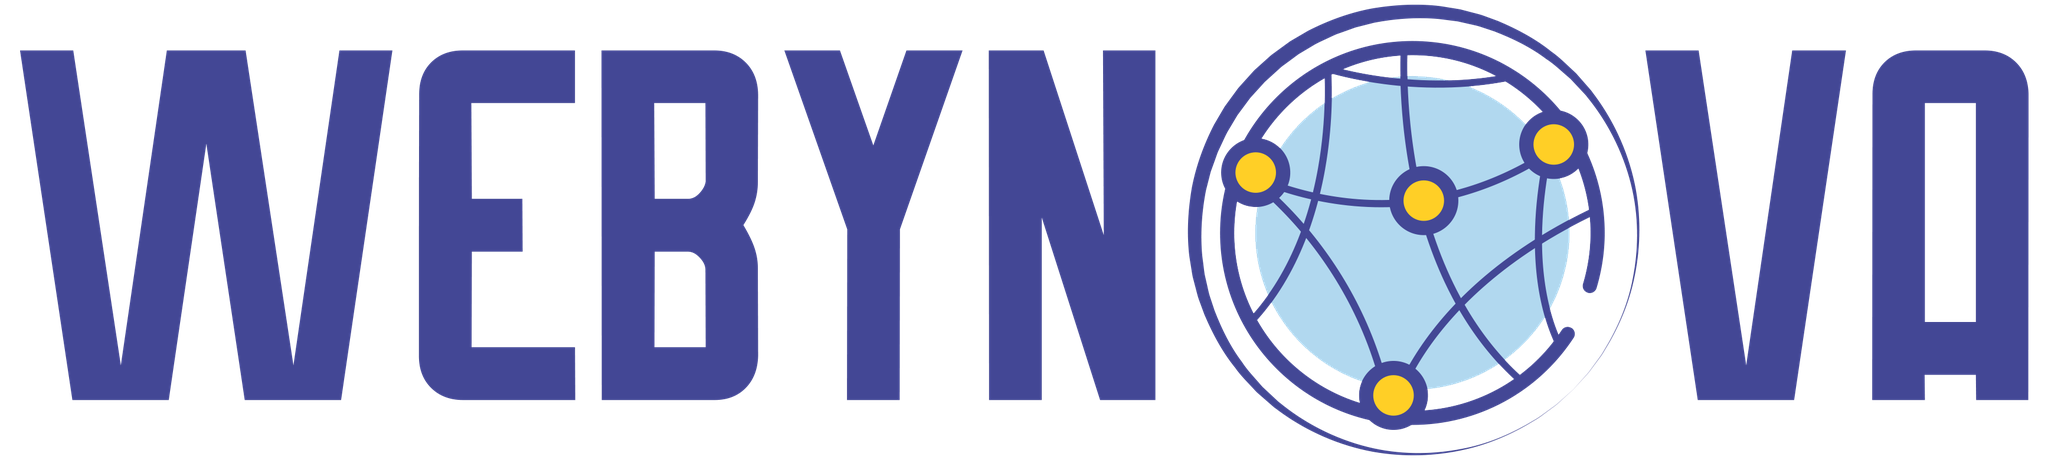 webynova logo